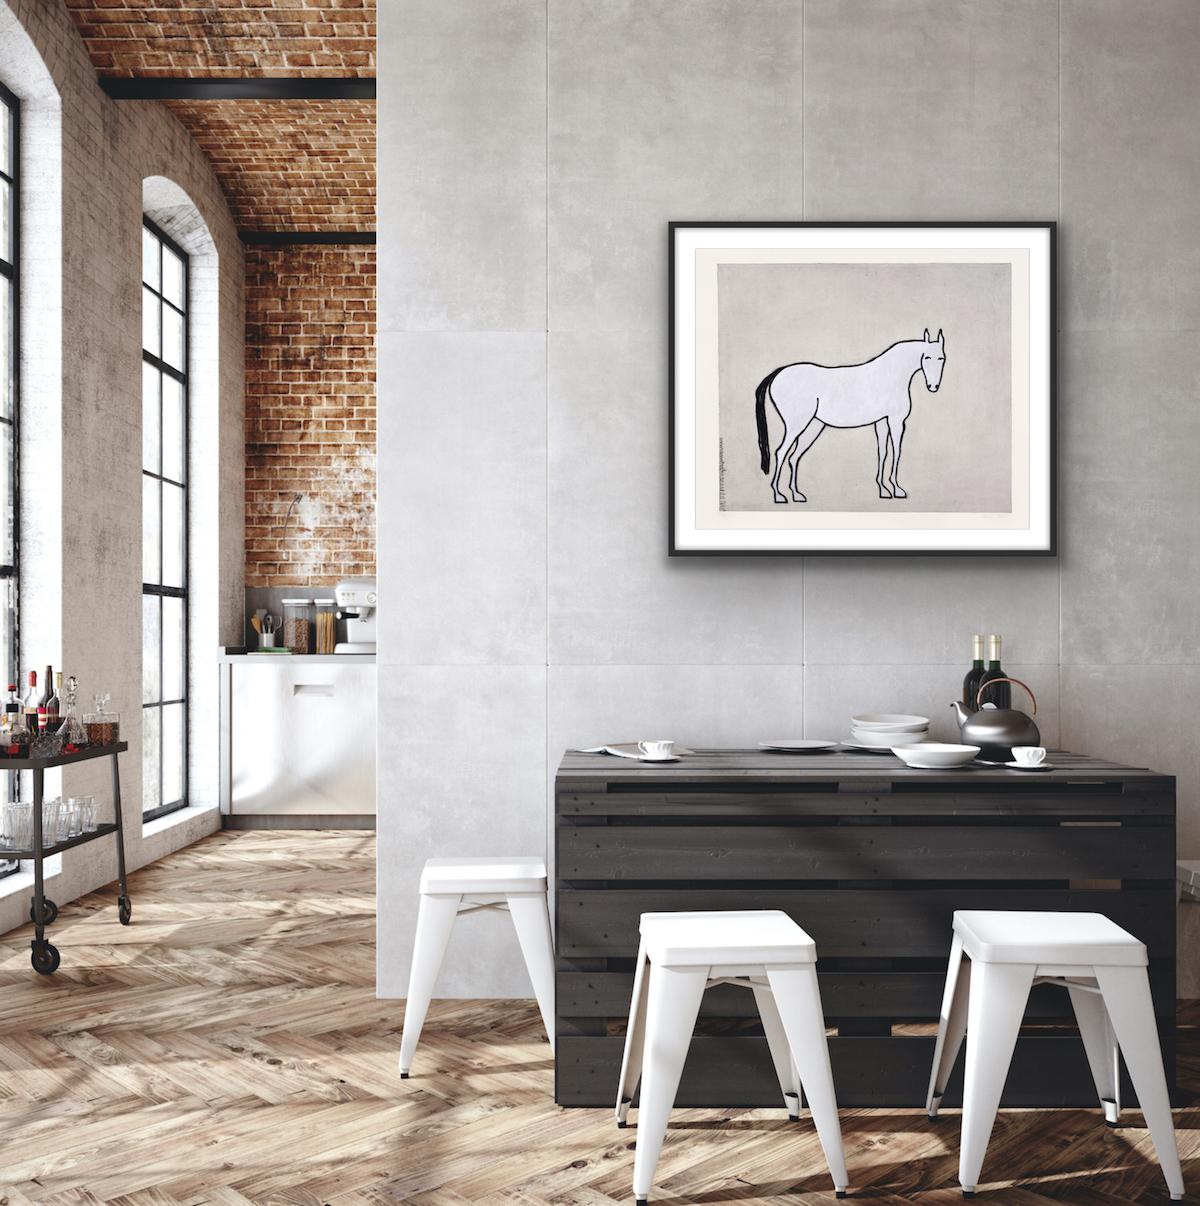 Austen, Art print, Horse, Animal print, Cartoon style print  For Sale 1